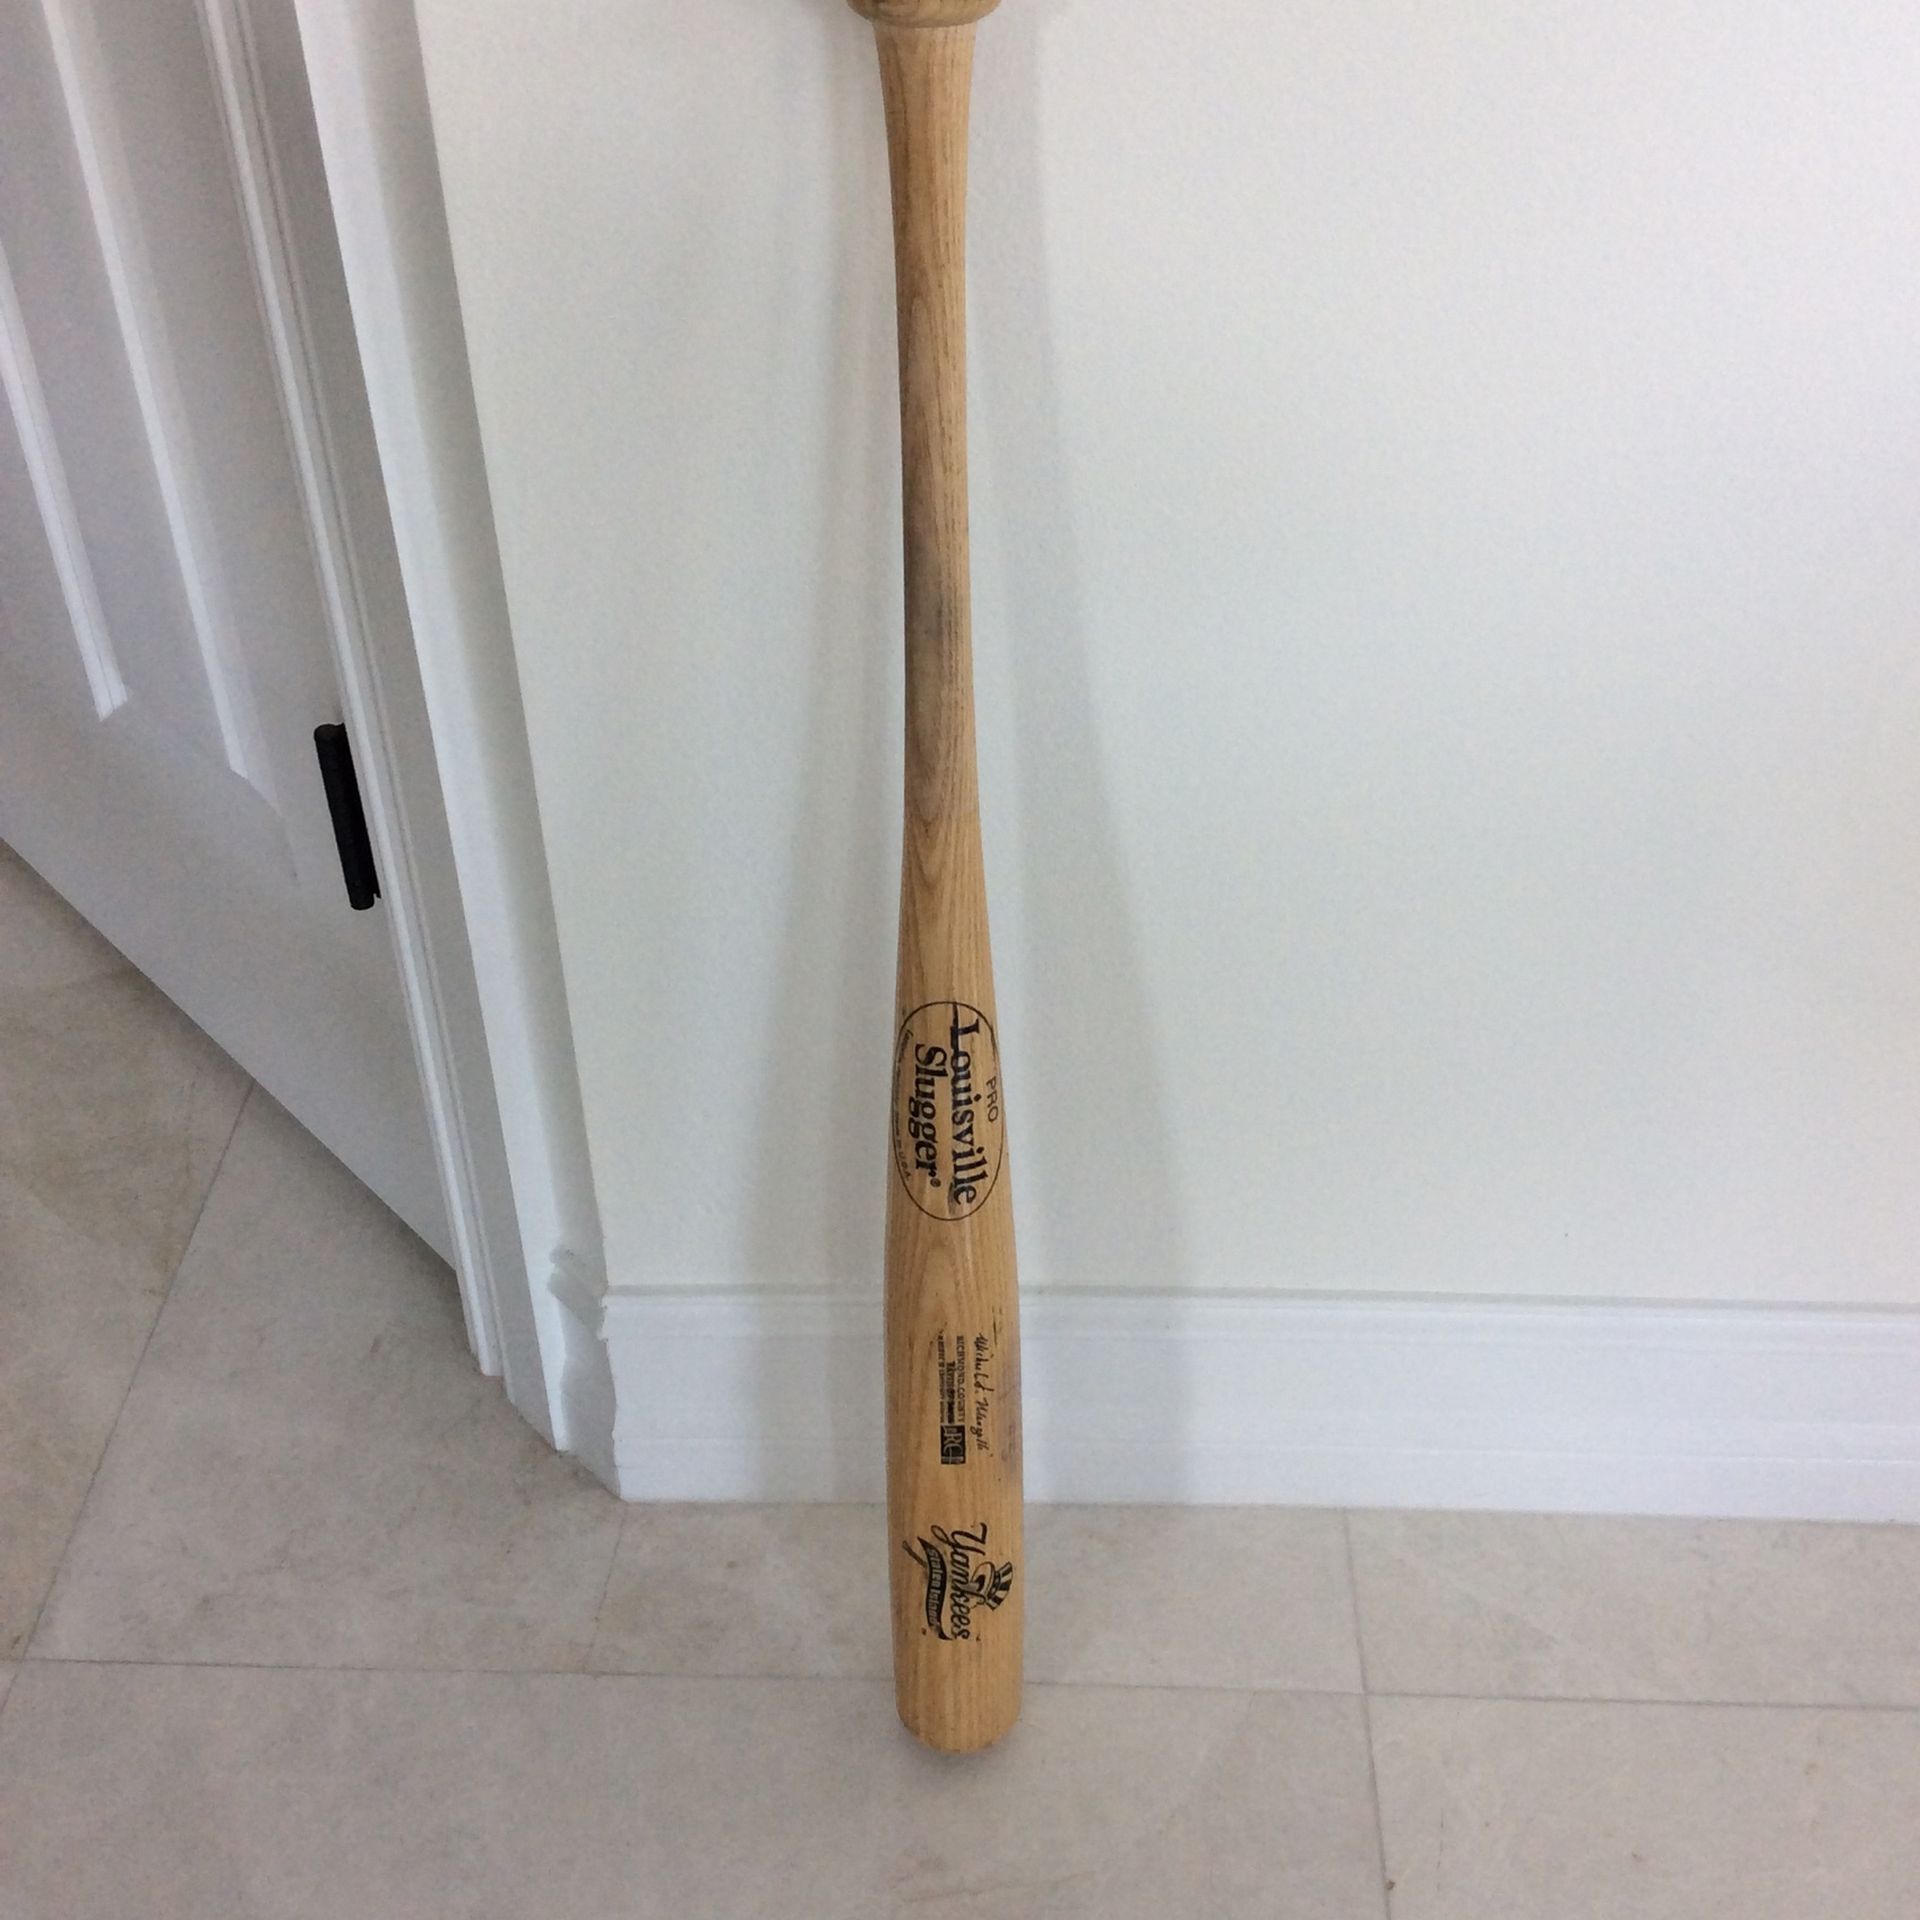 Louisville Slugger Pro Little League Wood Baseball Bat 29” Never Used for  Sale in Pompano Beach, FL - OfferUp